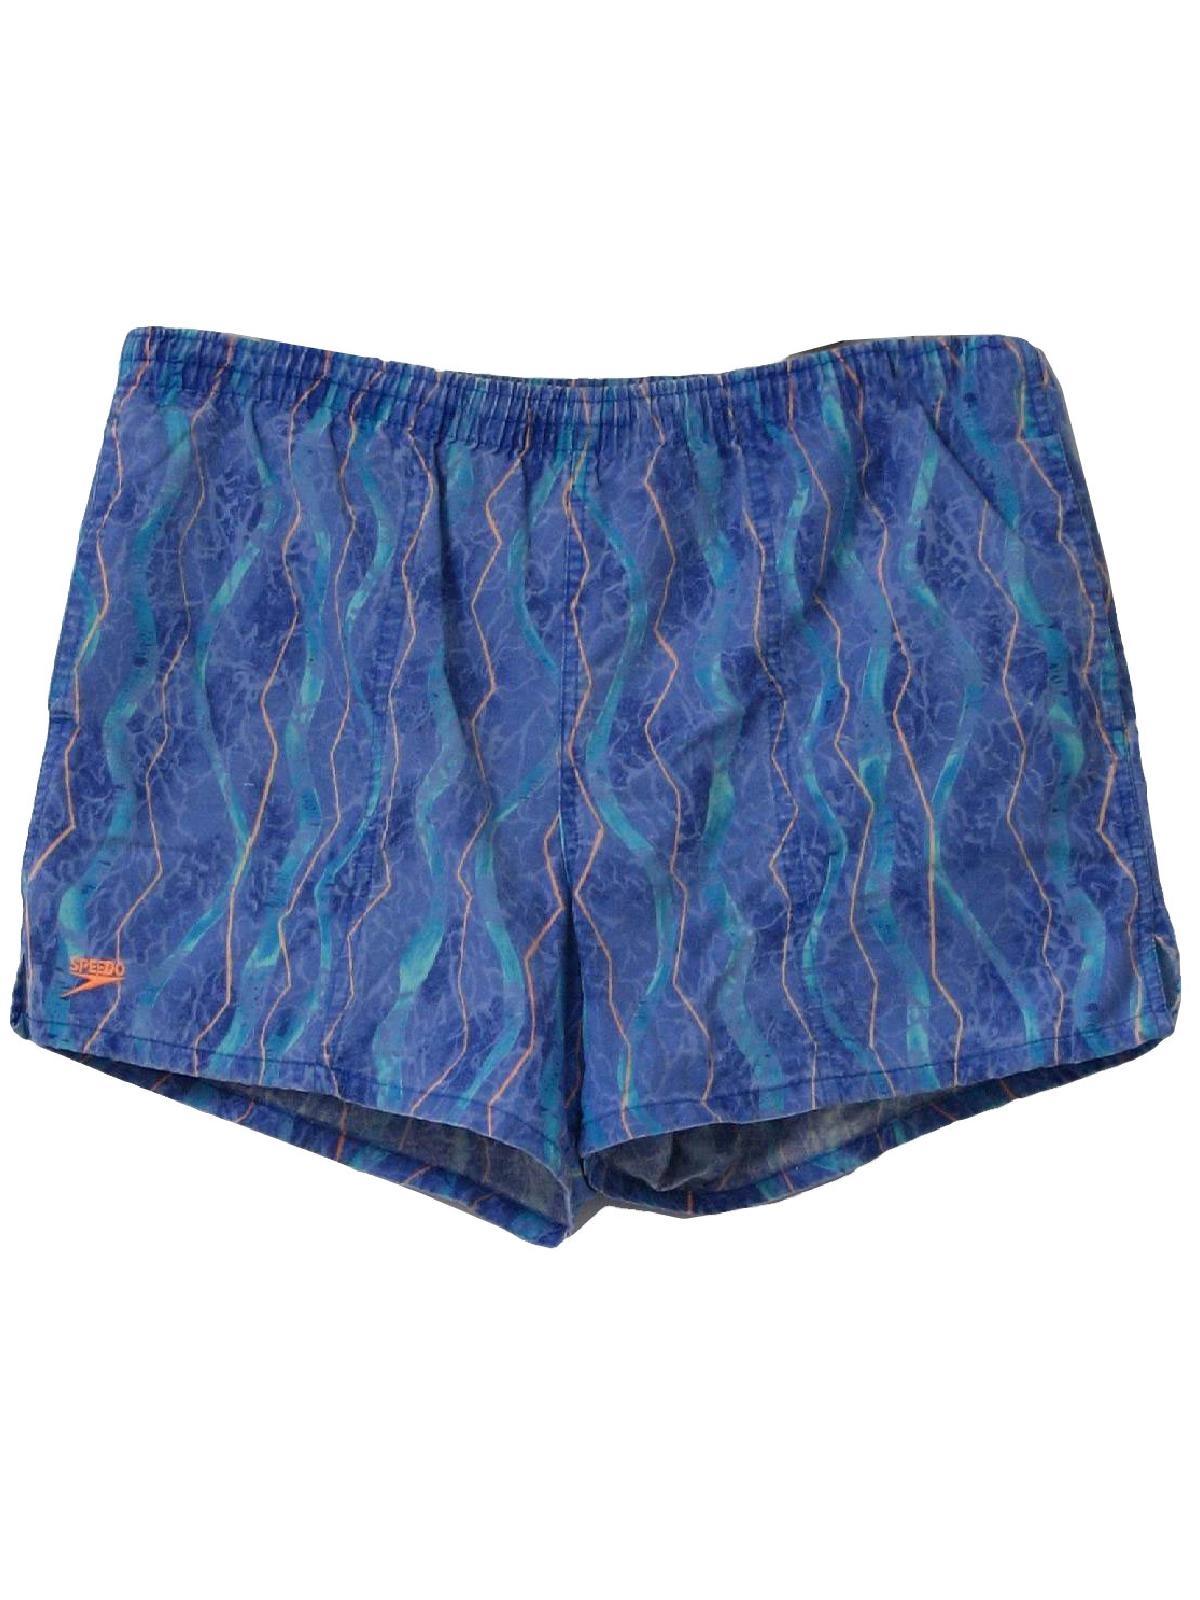 Speedo 80's Vintage Swimsuit/Swimwear: 80s -Speedo- Mens shaded blue ...